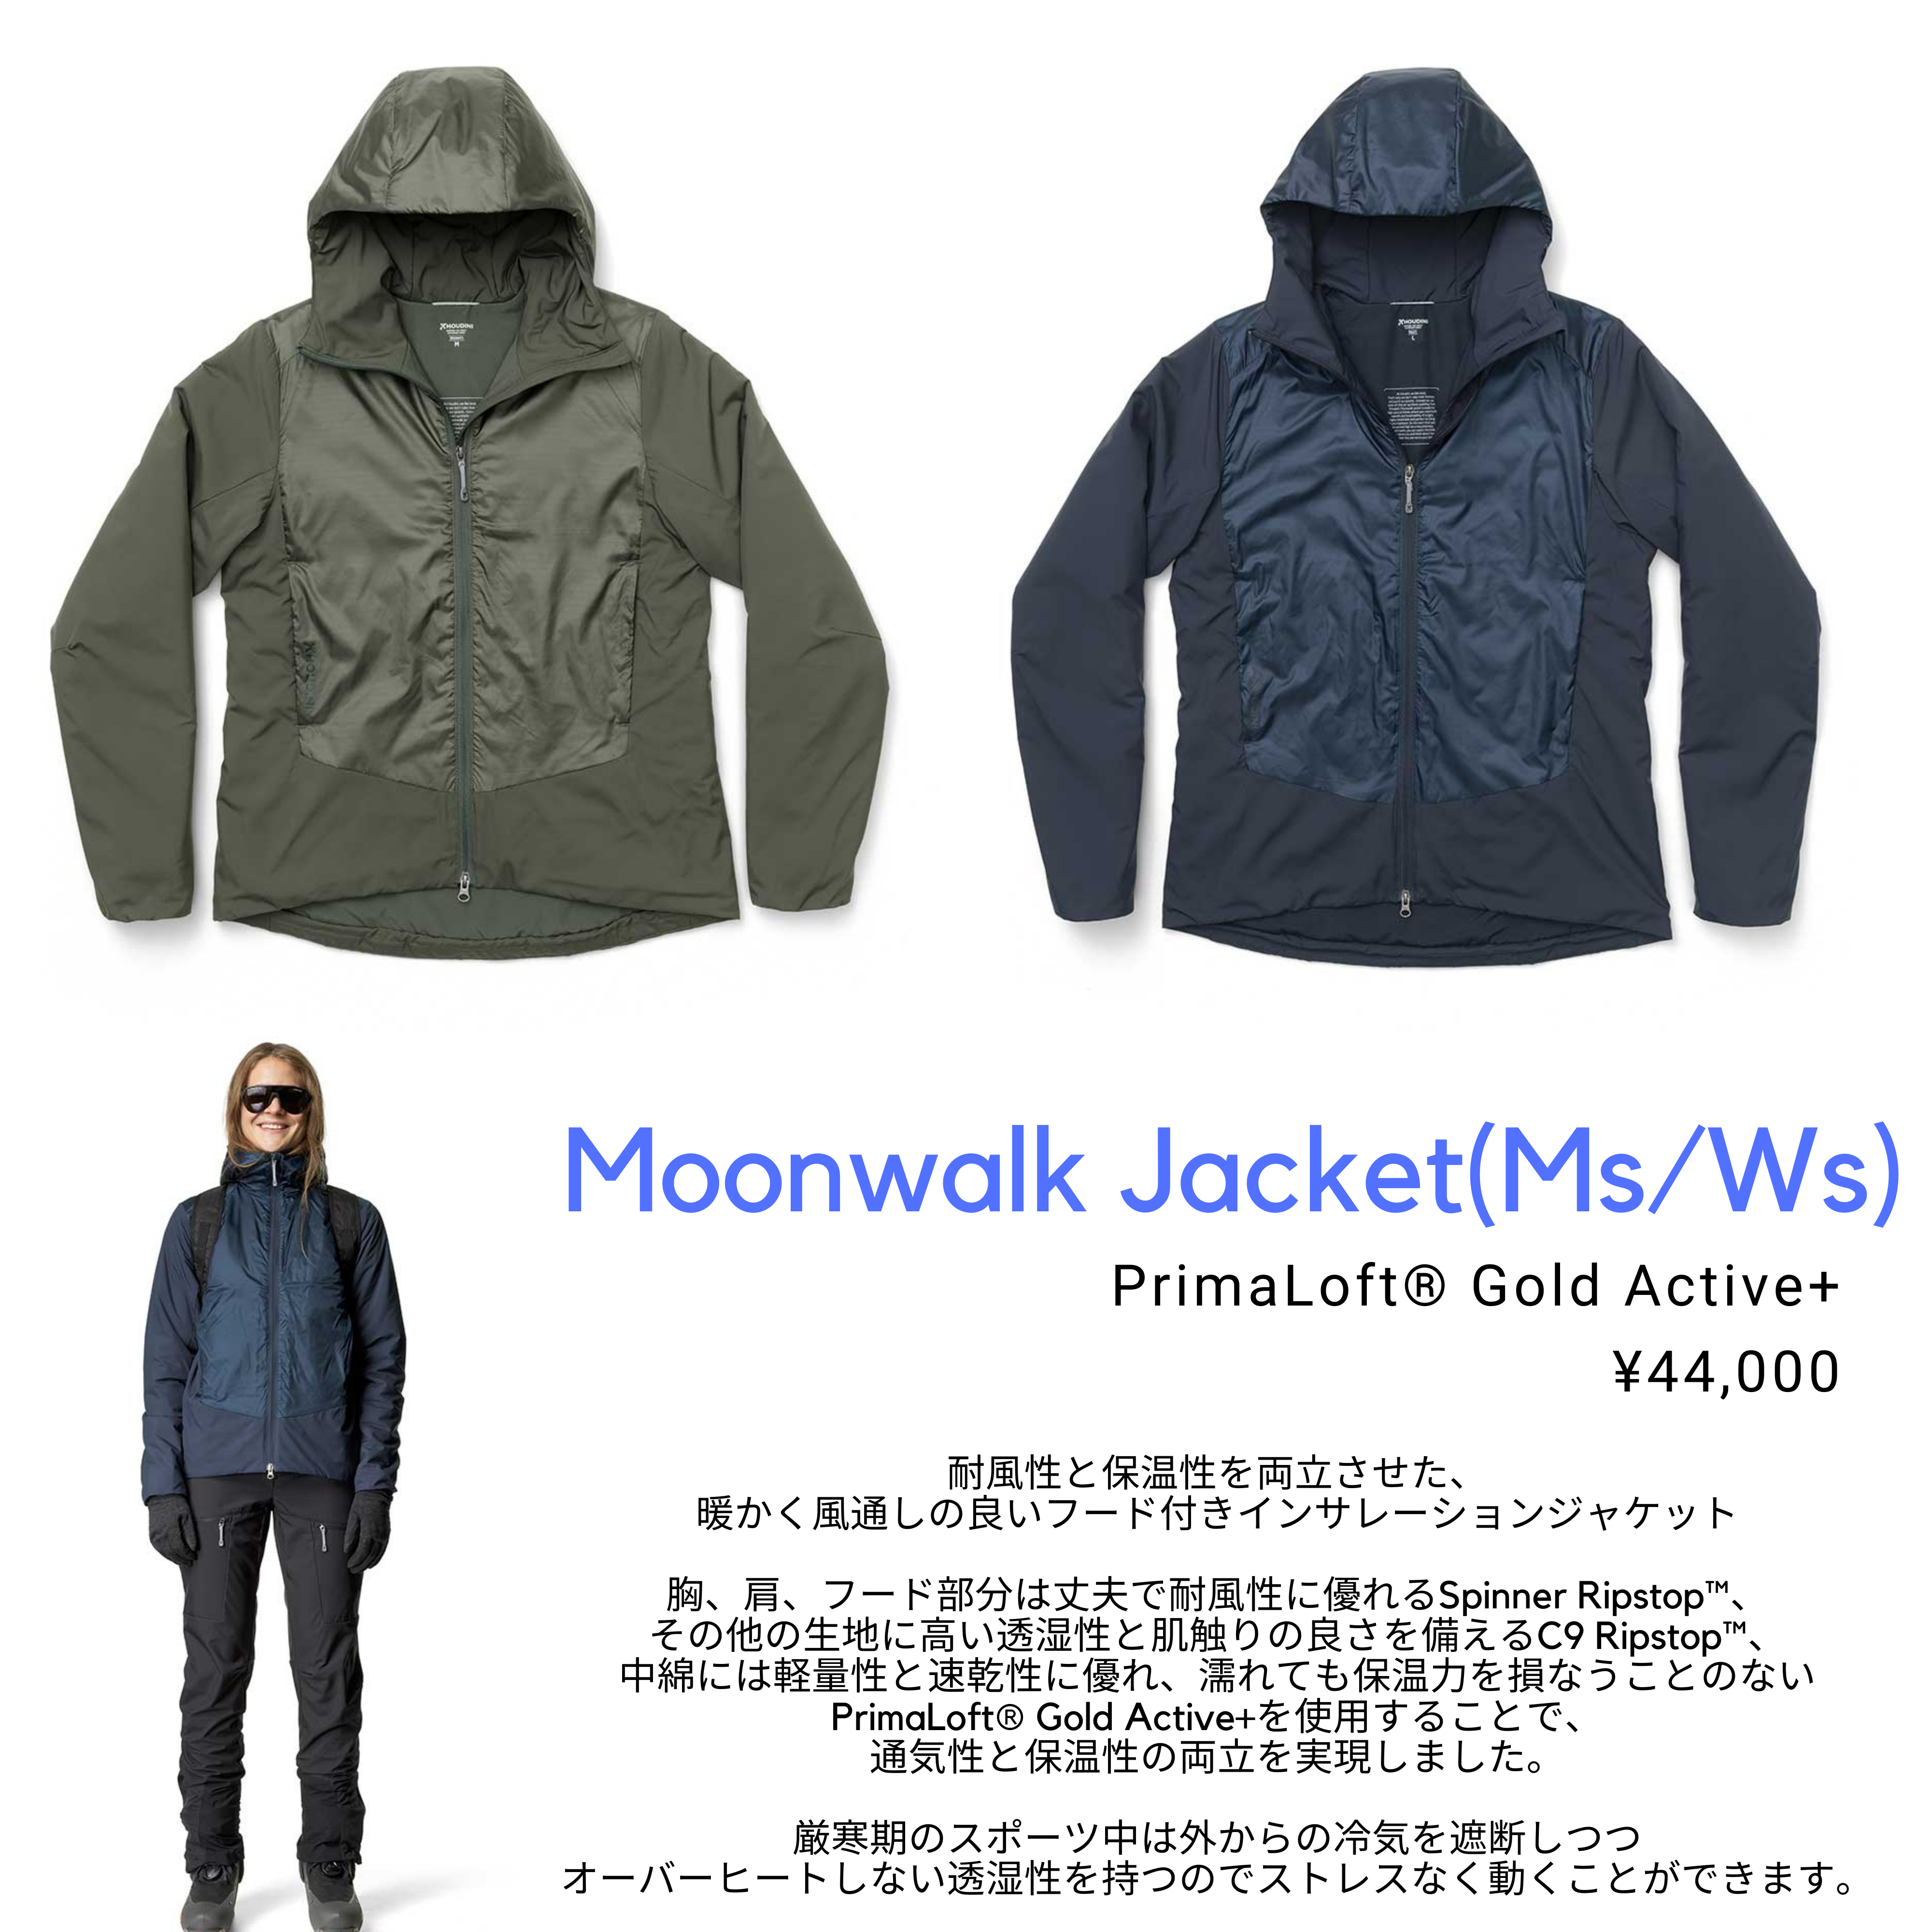 Moonwalk Jacket(Ms/Ws) PrimaLoft® Gold Active+